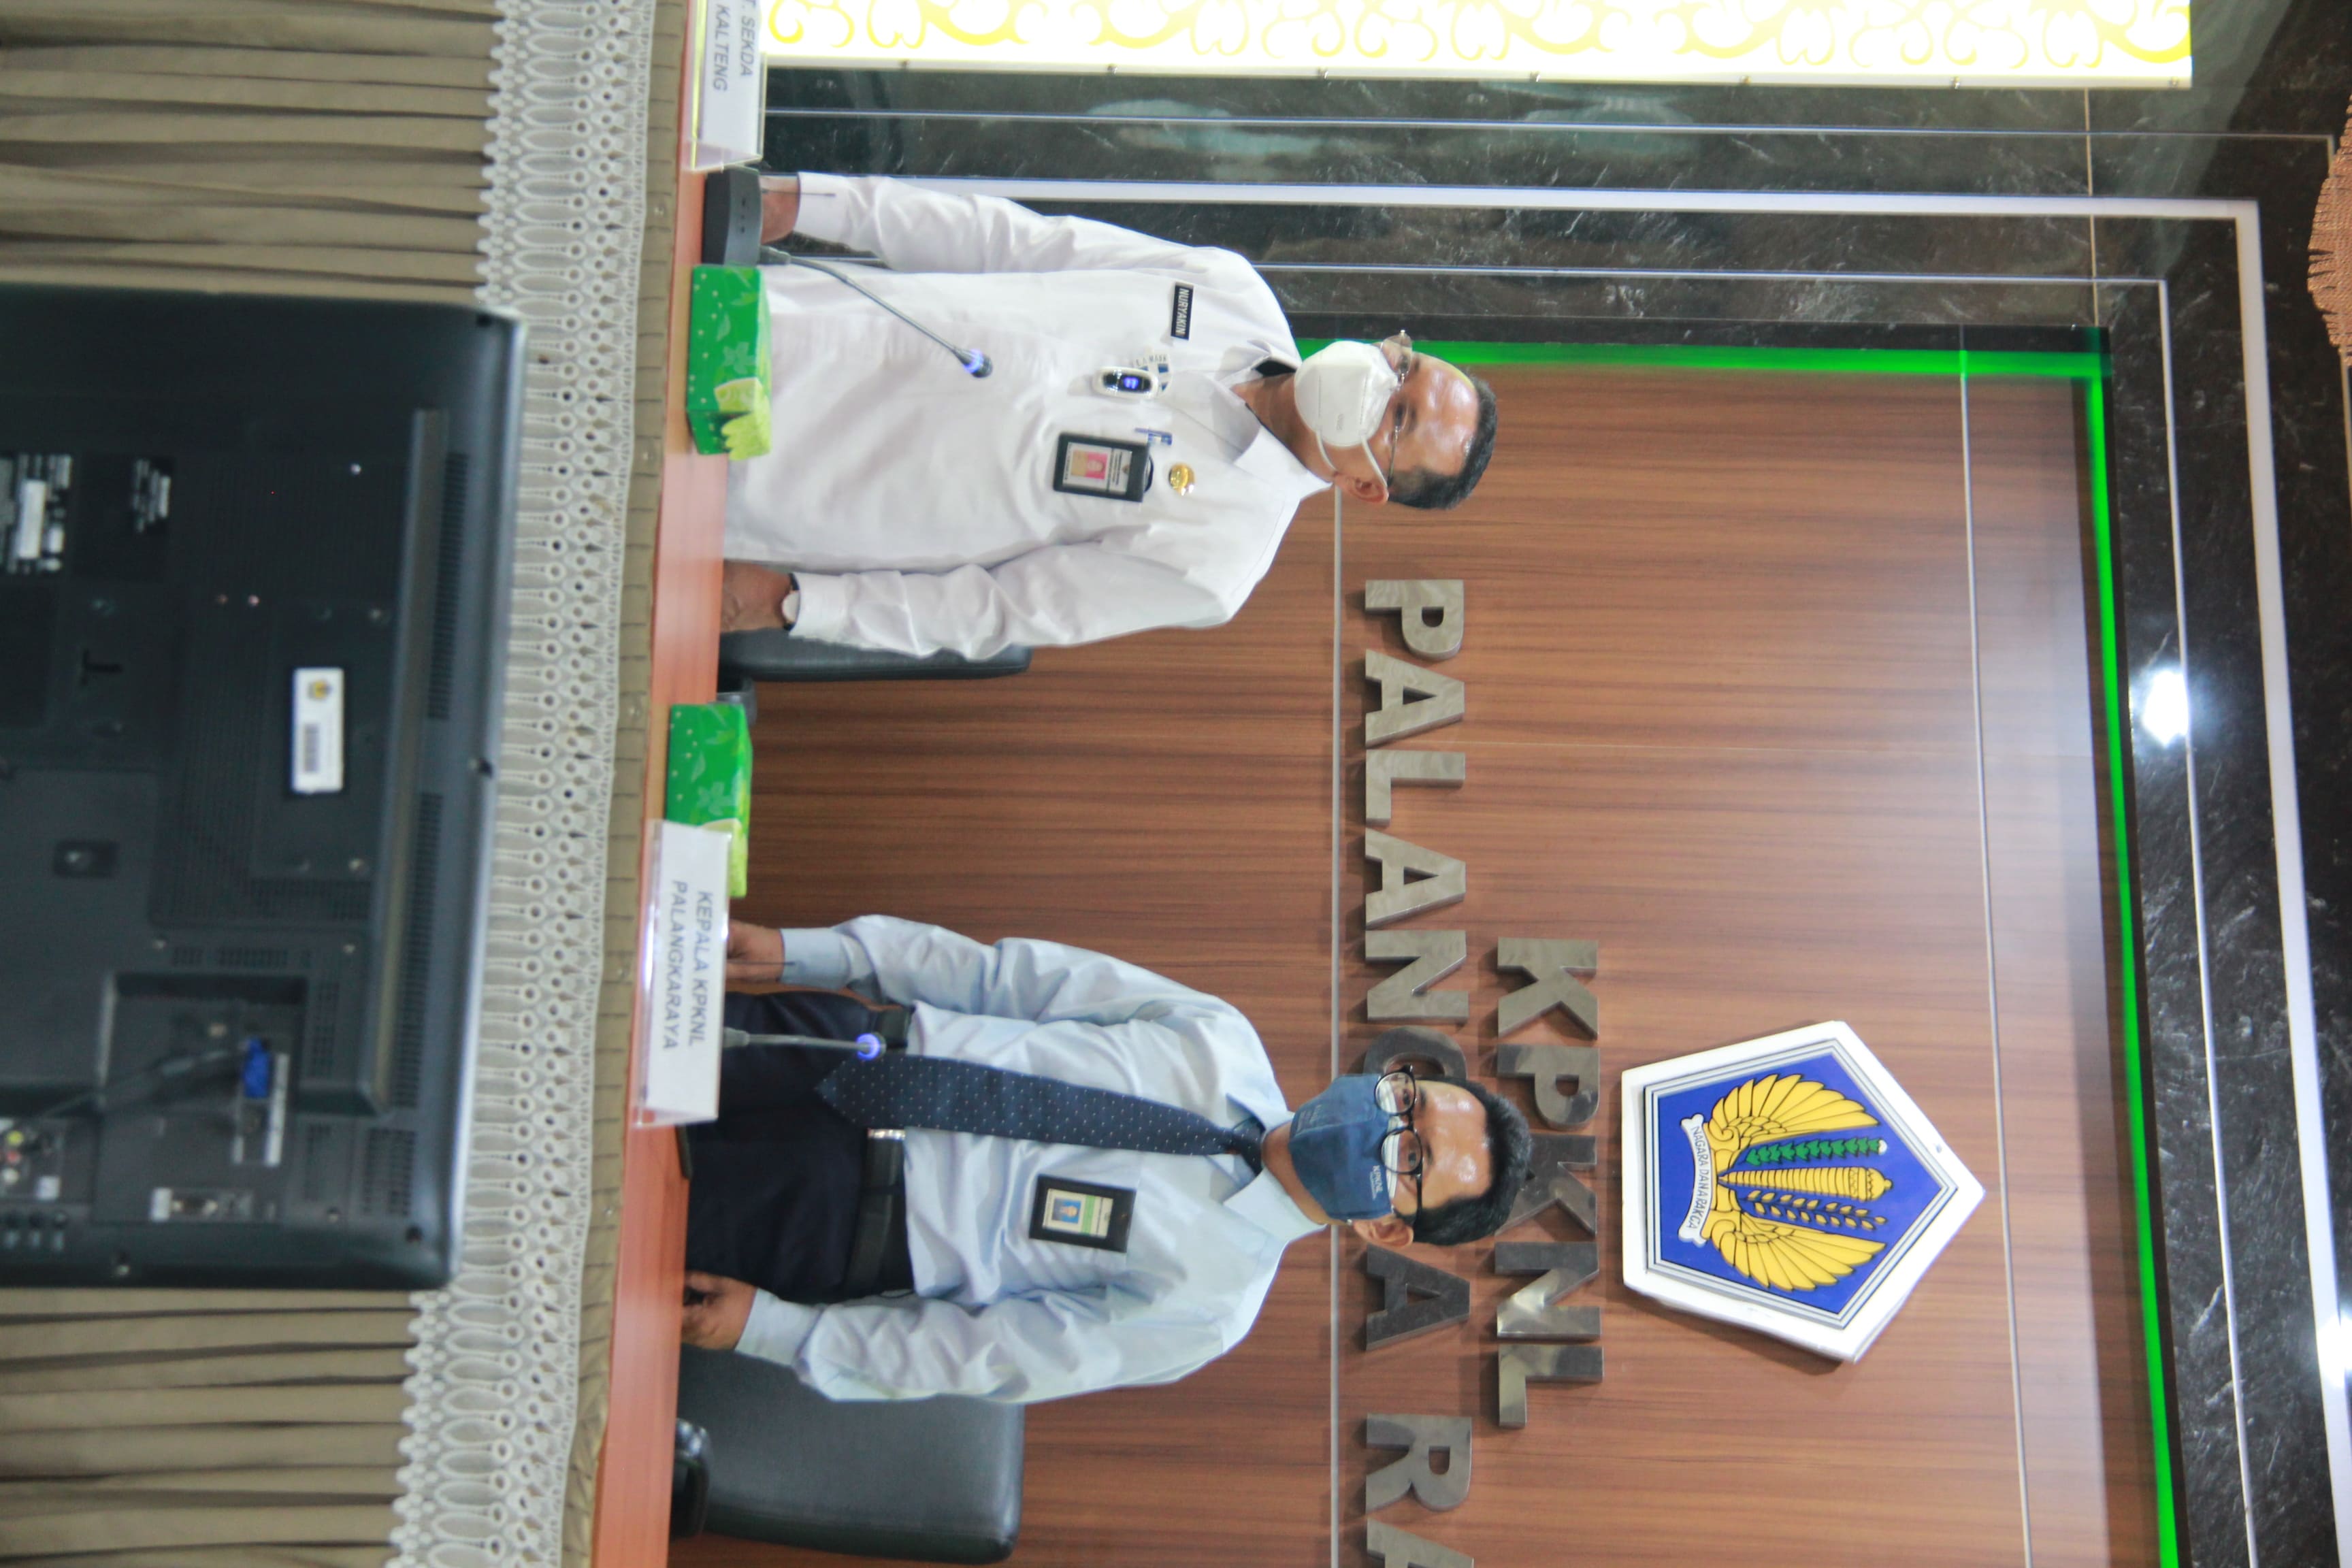 Lelang Perdana Barang Milik Daerah Pemerintah Provinsi Kalimantan Tengah pada website lelang.go.id